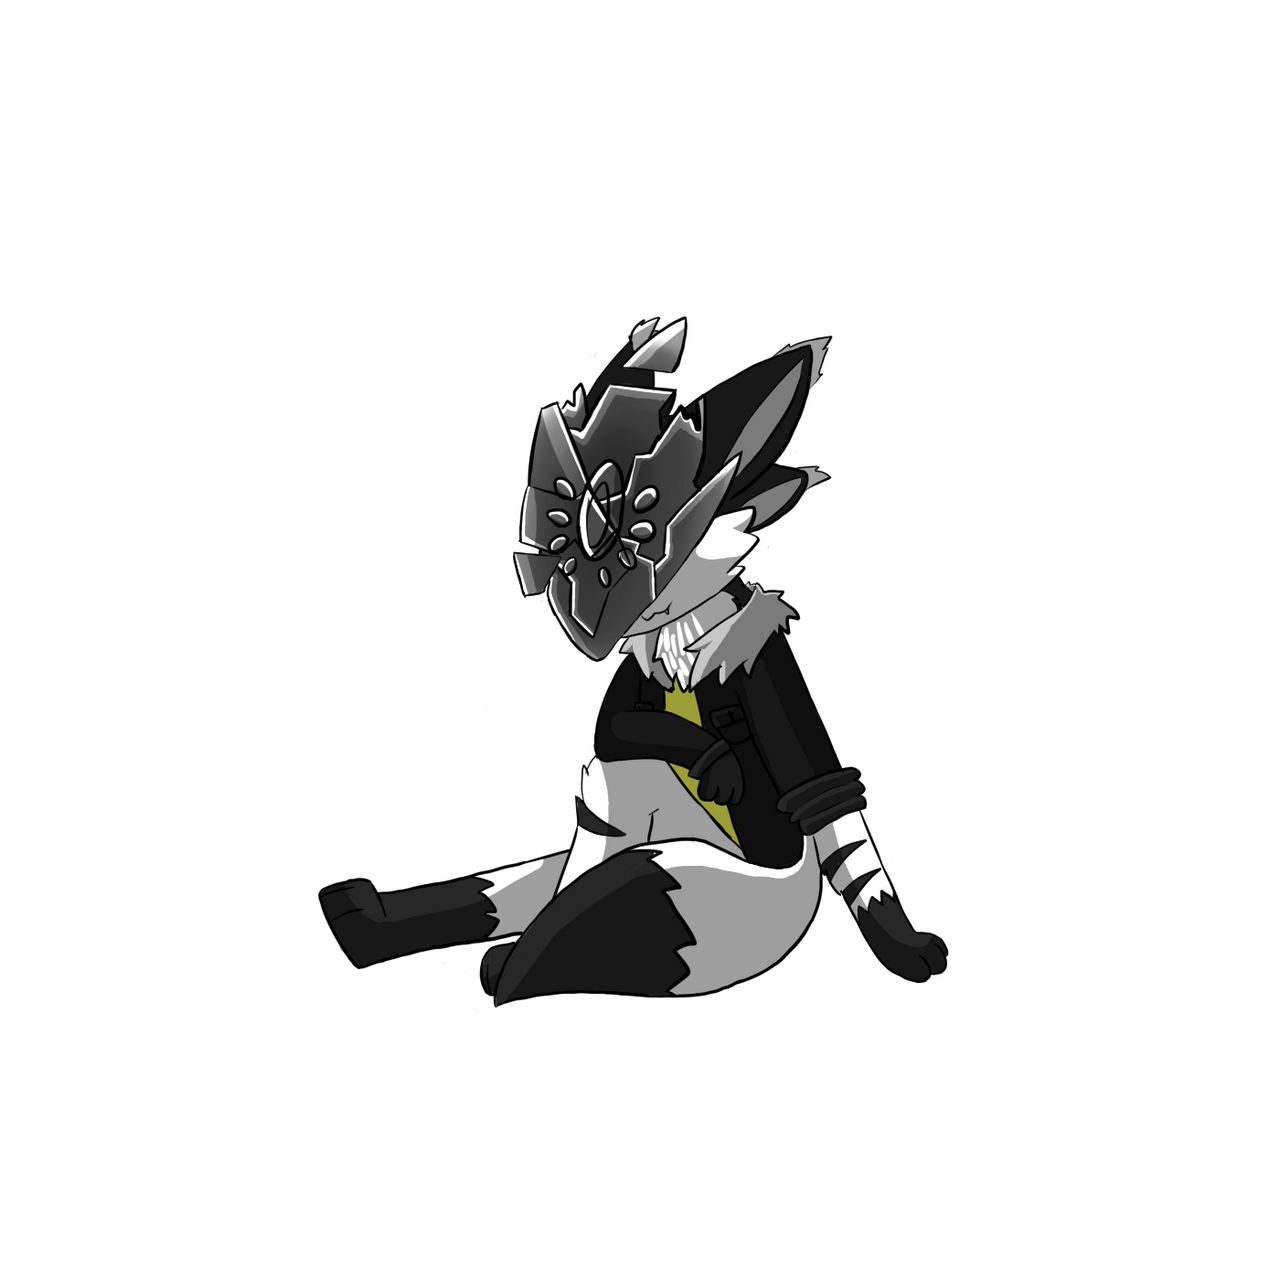 My roblox avatar (just the furry) by LunaticSeagulls on DeviantArt